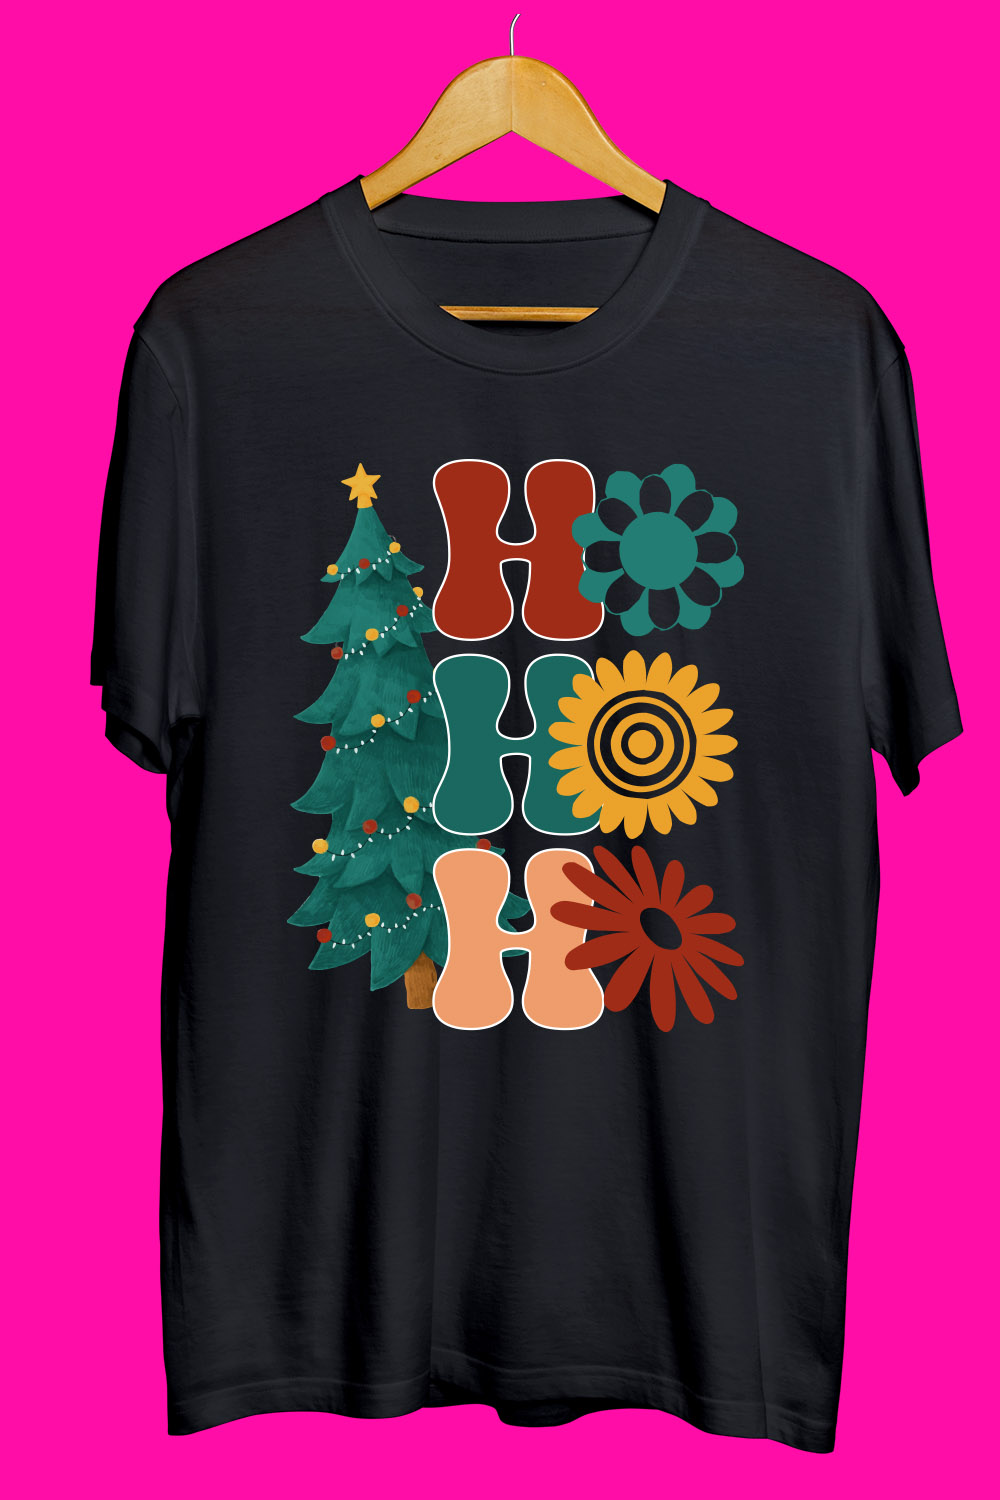 Christmas SVG T Shirt Designs Bundle pinterest preview image.